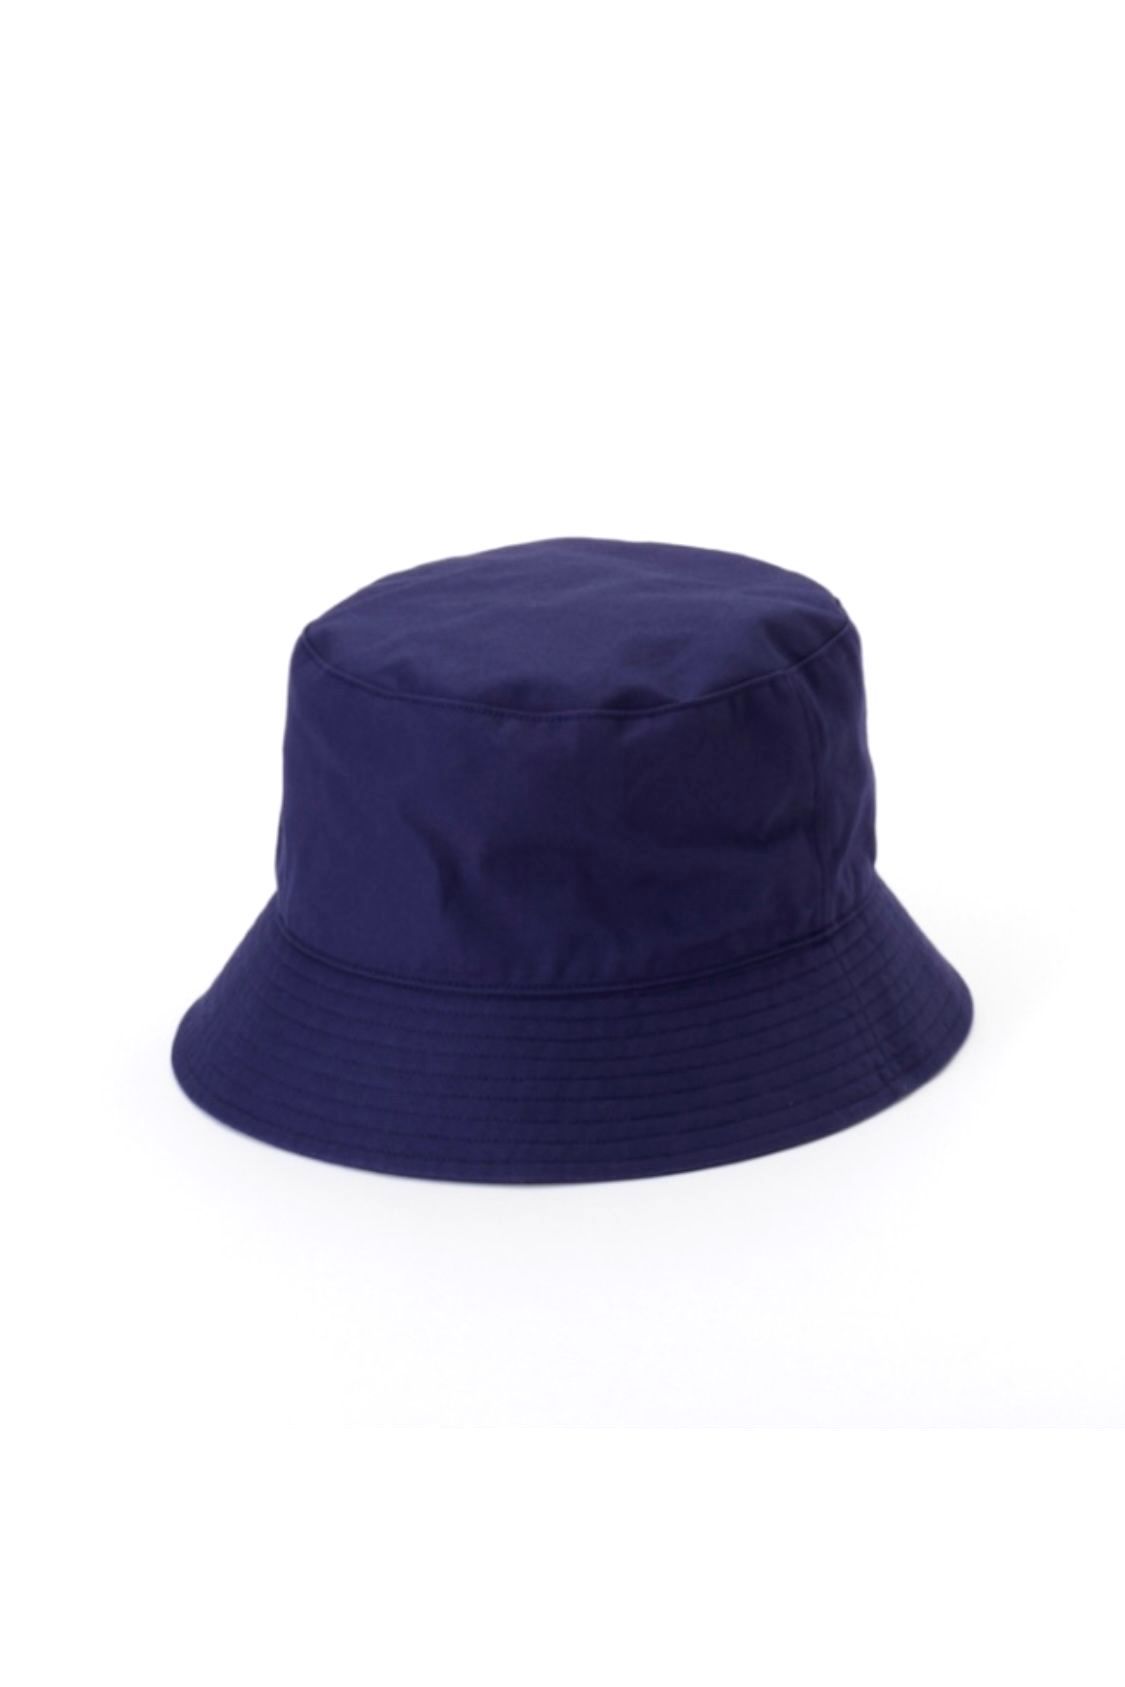 KIJIMA TAKAYUKI - ventile bucket hat -navy- 23ss | asterisk